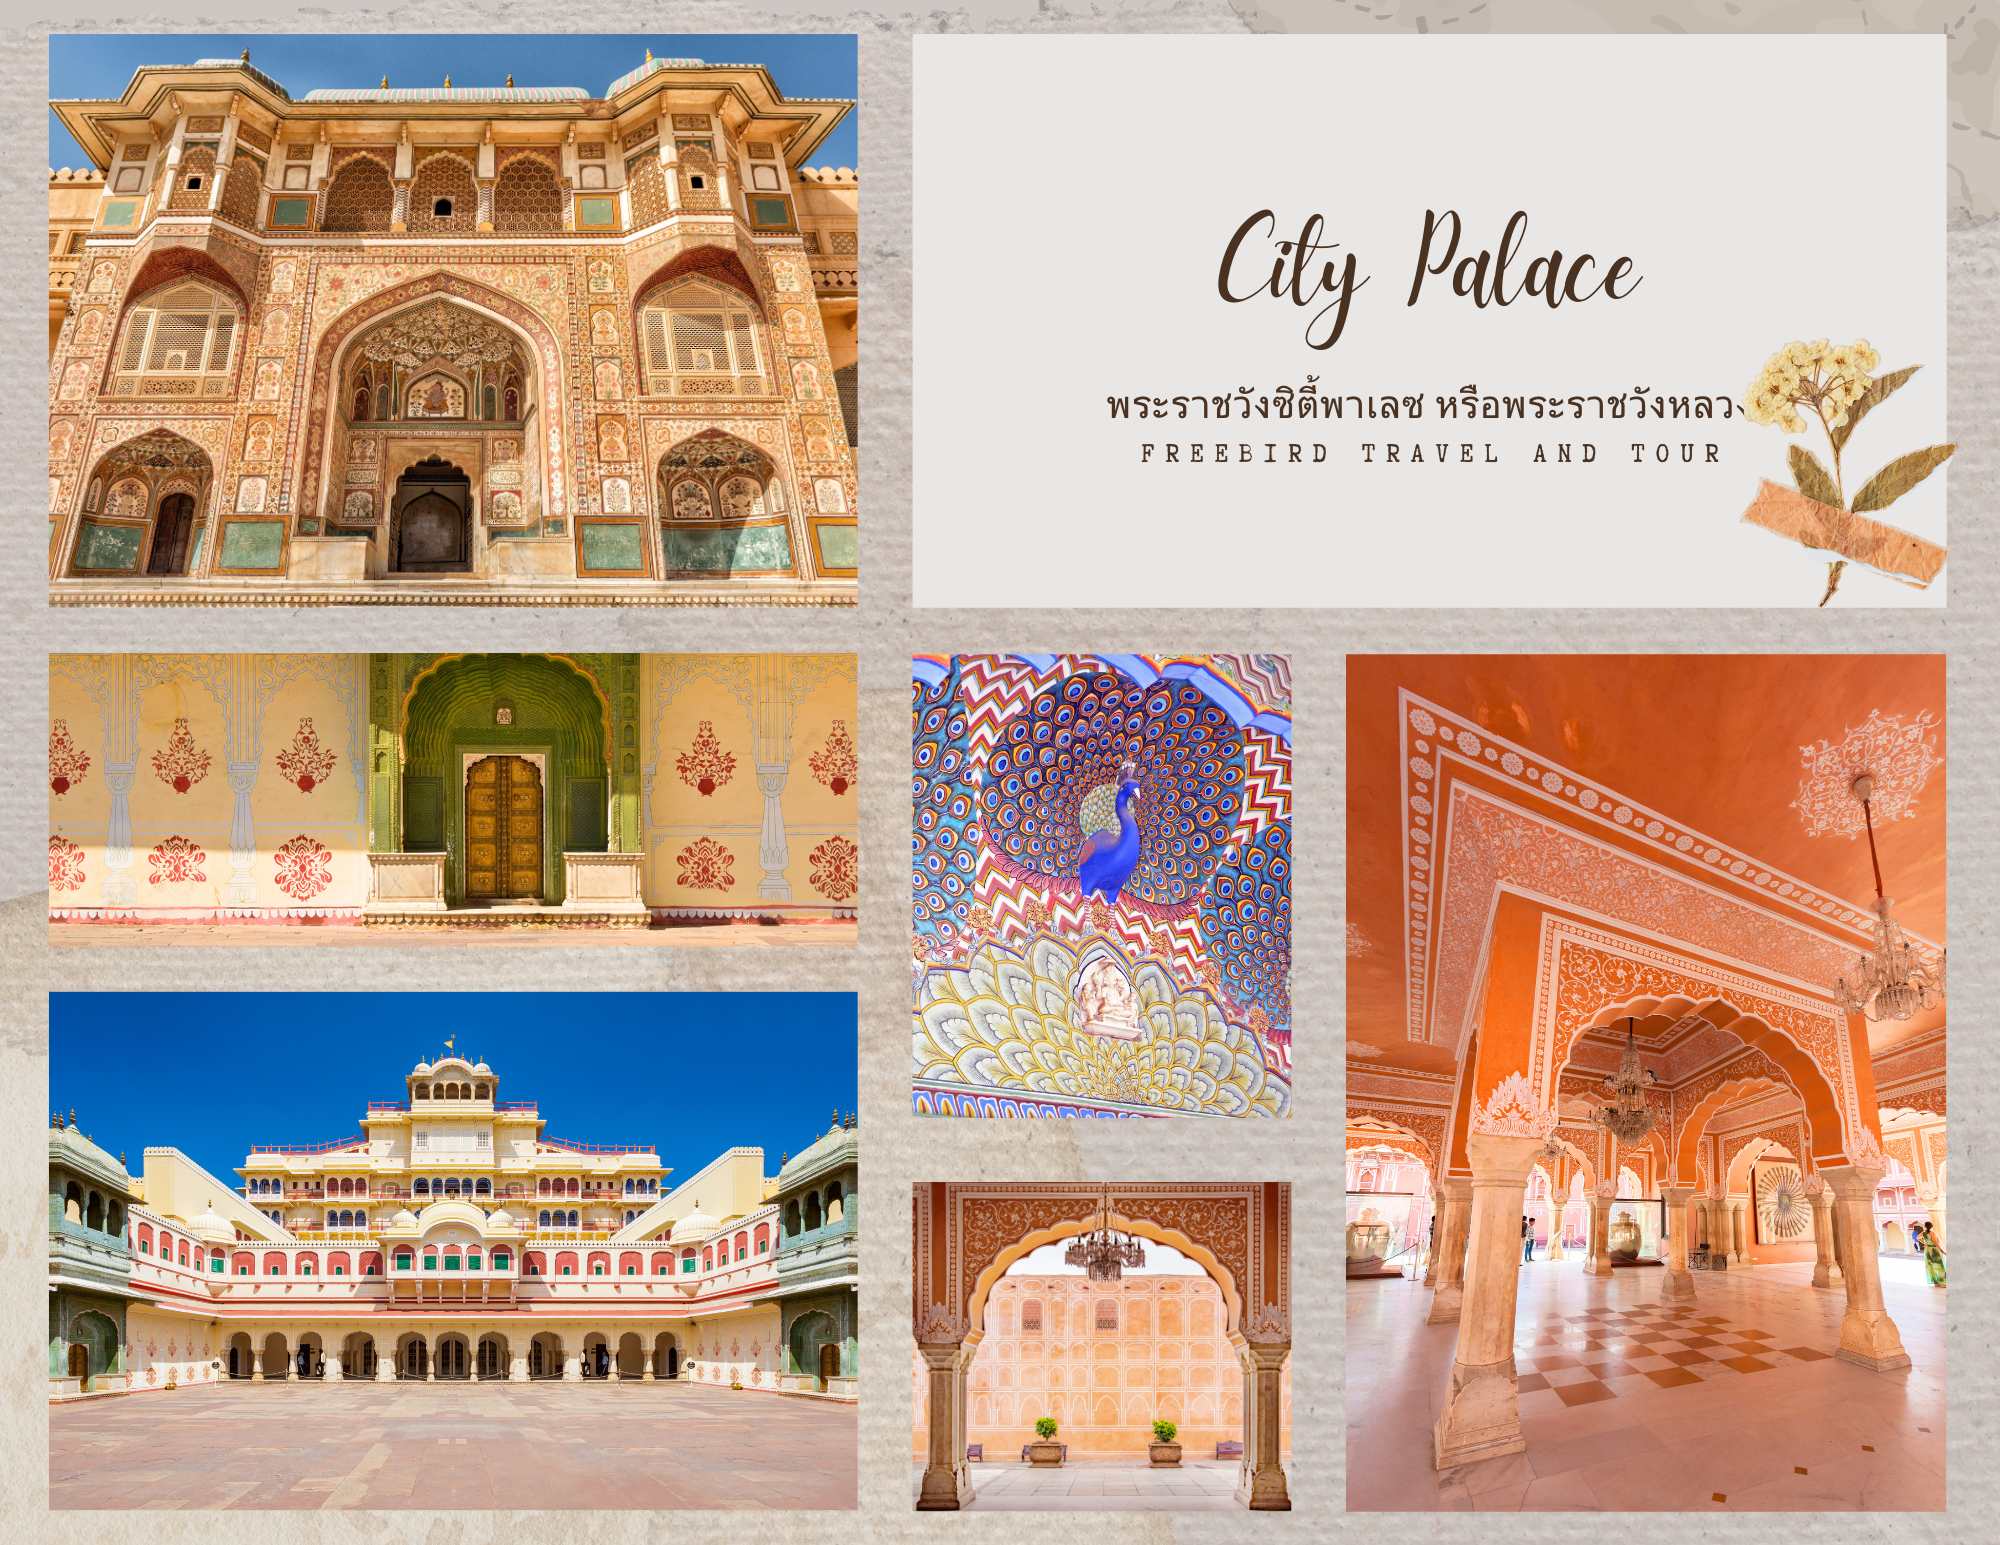 jaipur-india-freebirdtour-citypalace